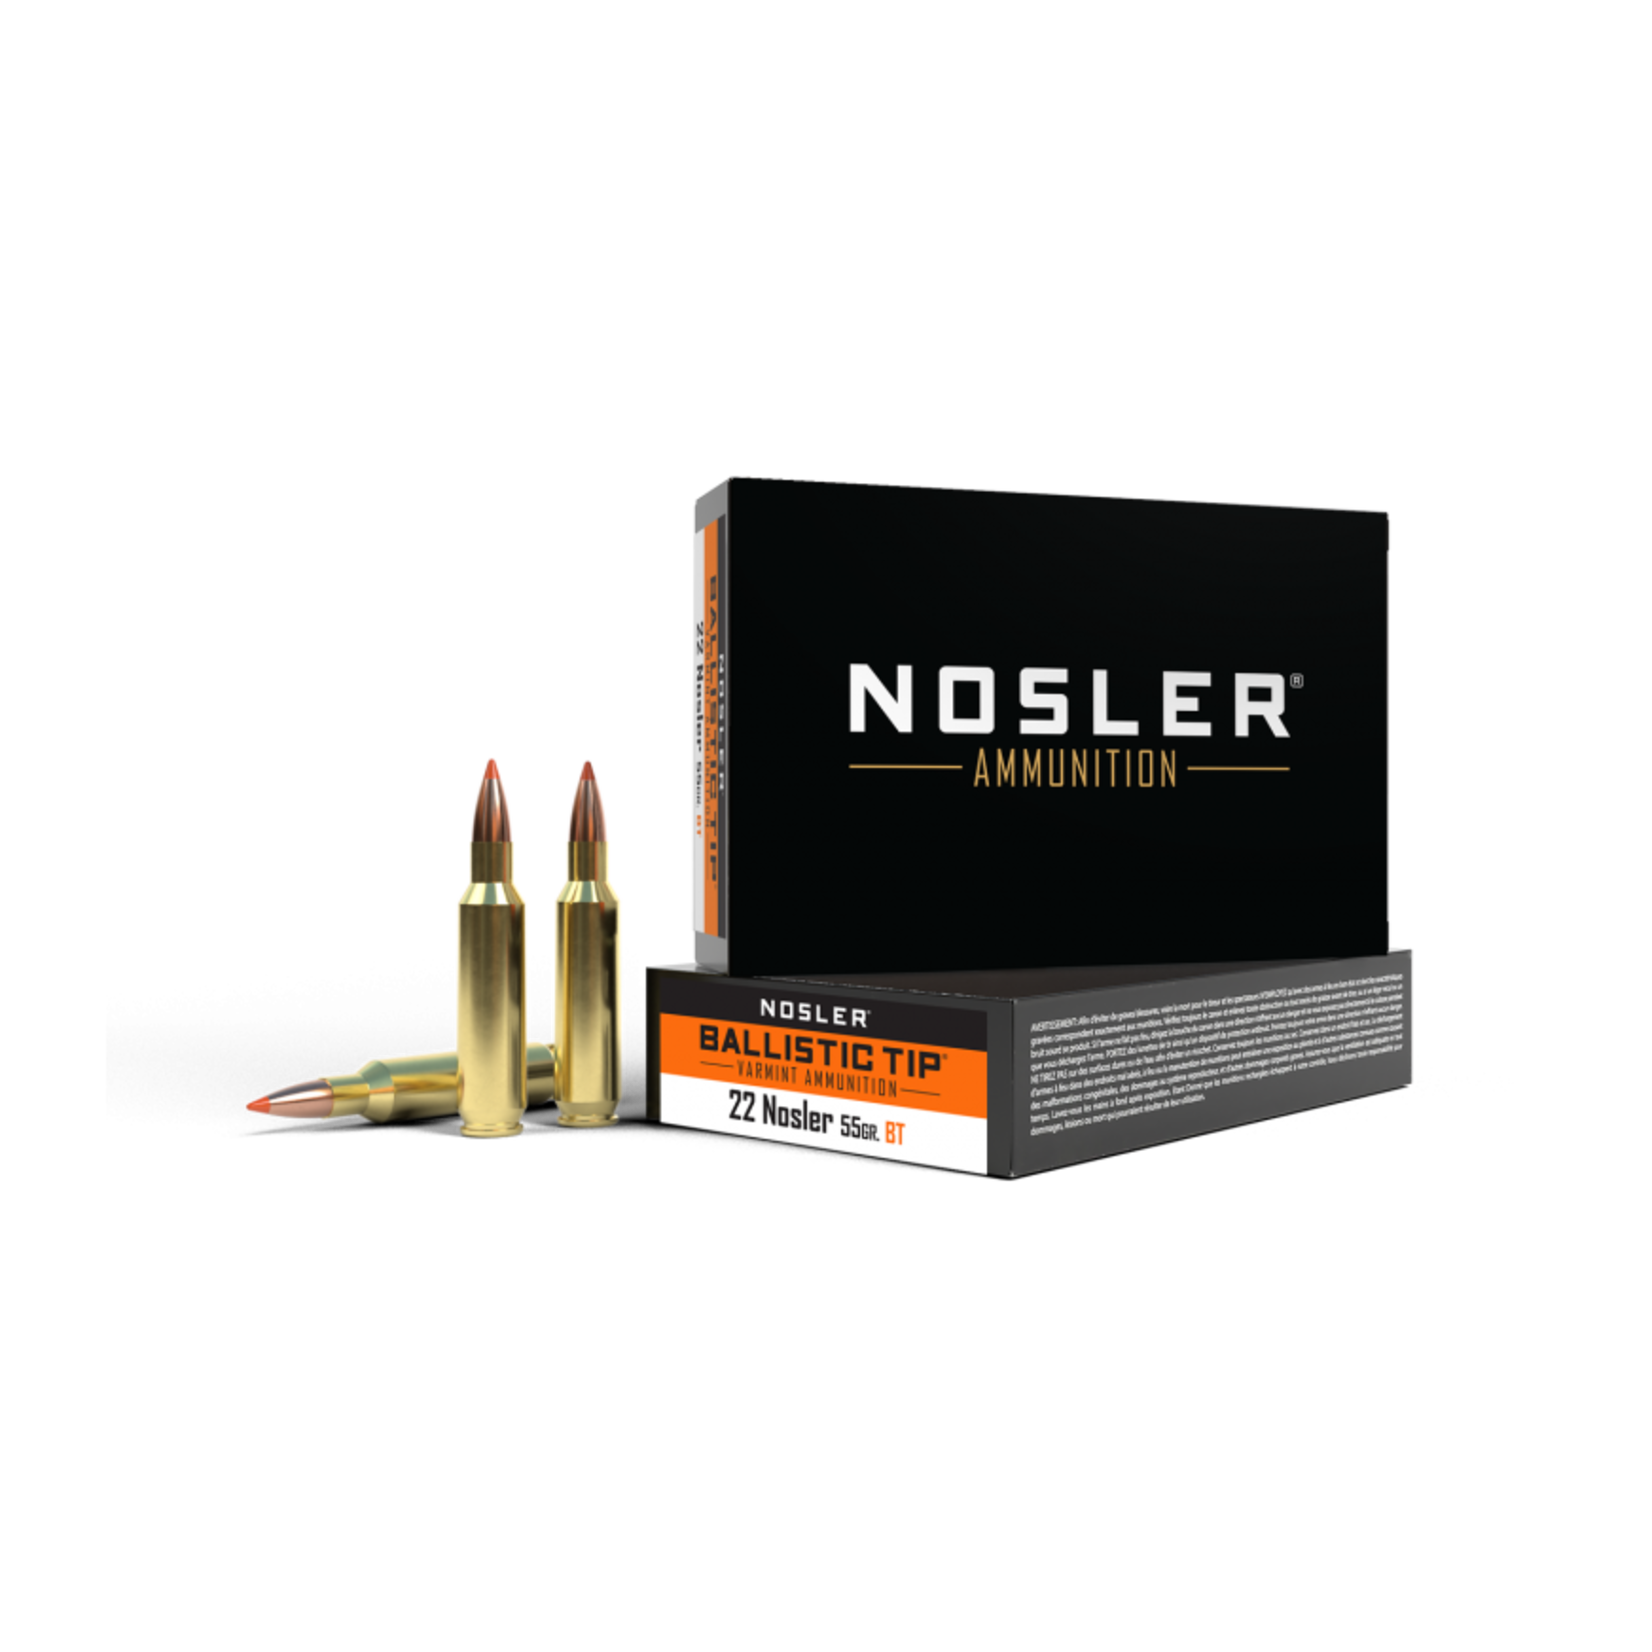 Nosler Trophy Grade Ammunition 22 Nosler 55 Grain Ballistic Tip (20 Rounds)